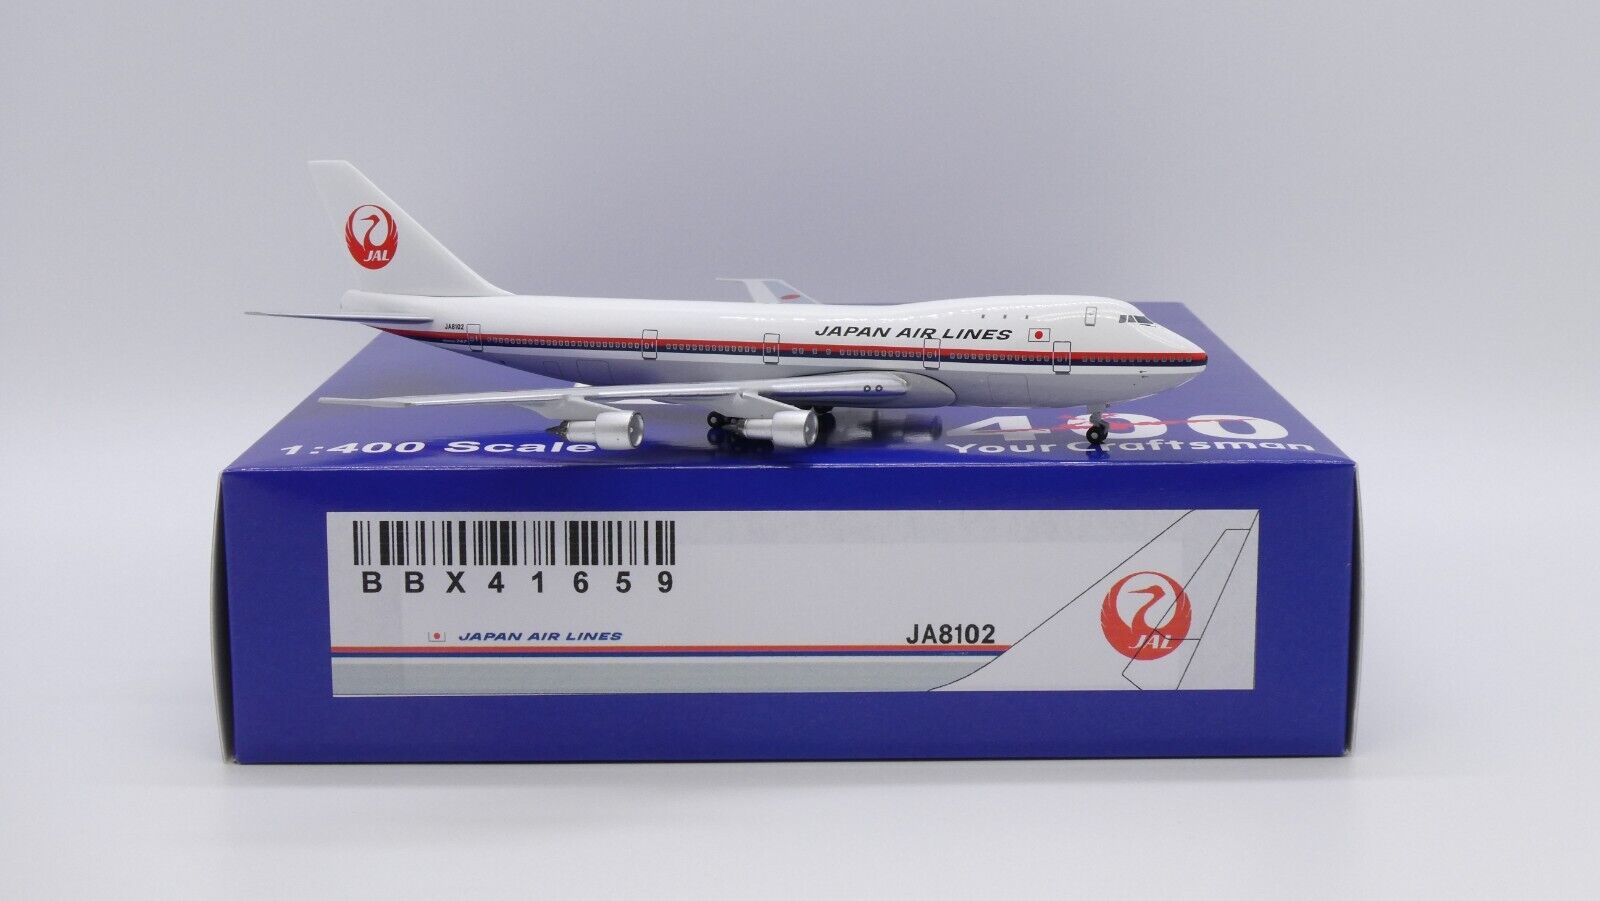 Japan Airlines B747-100 Reg: JA8102 1:400 Aeroclassics Diecast BBX41659 (HK)